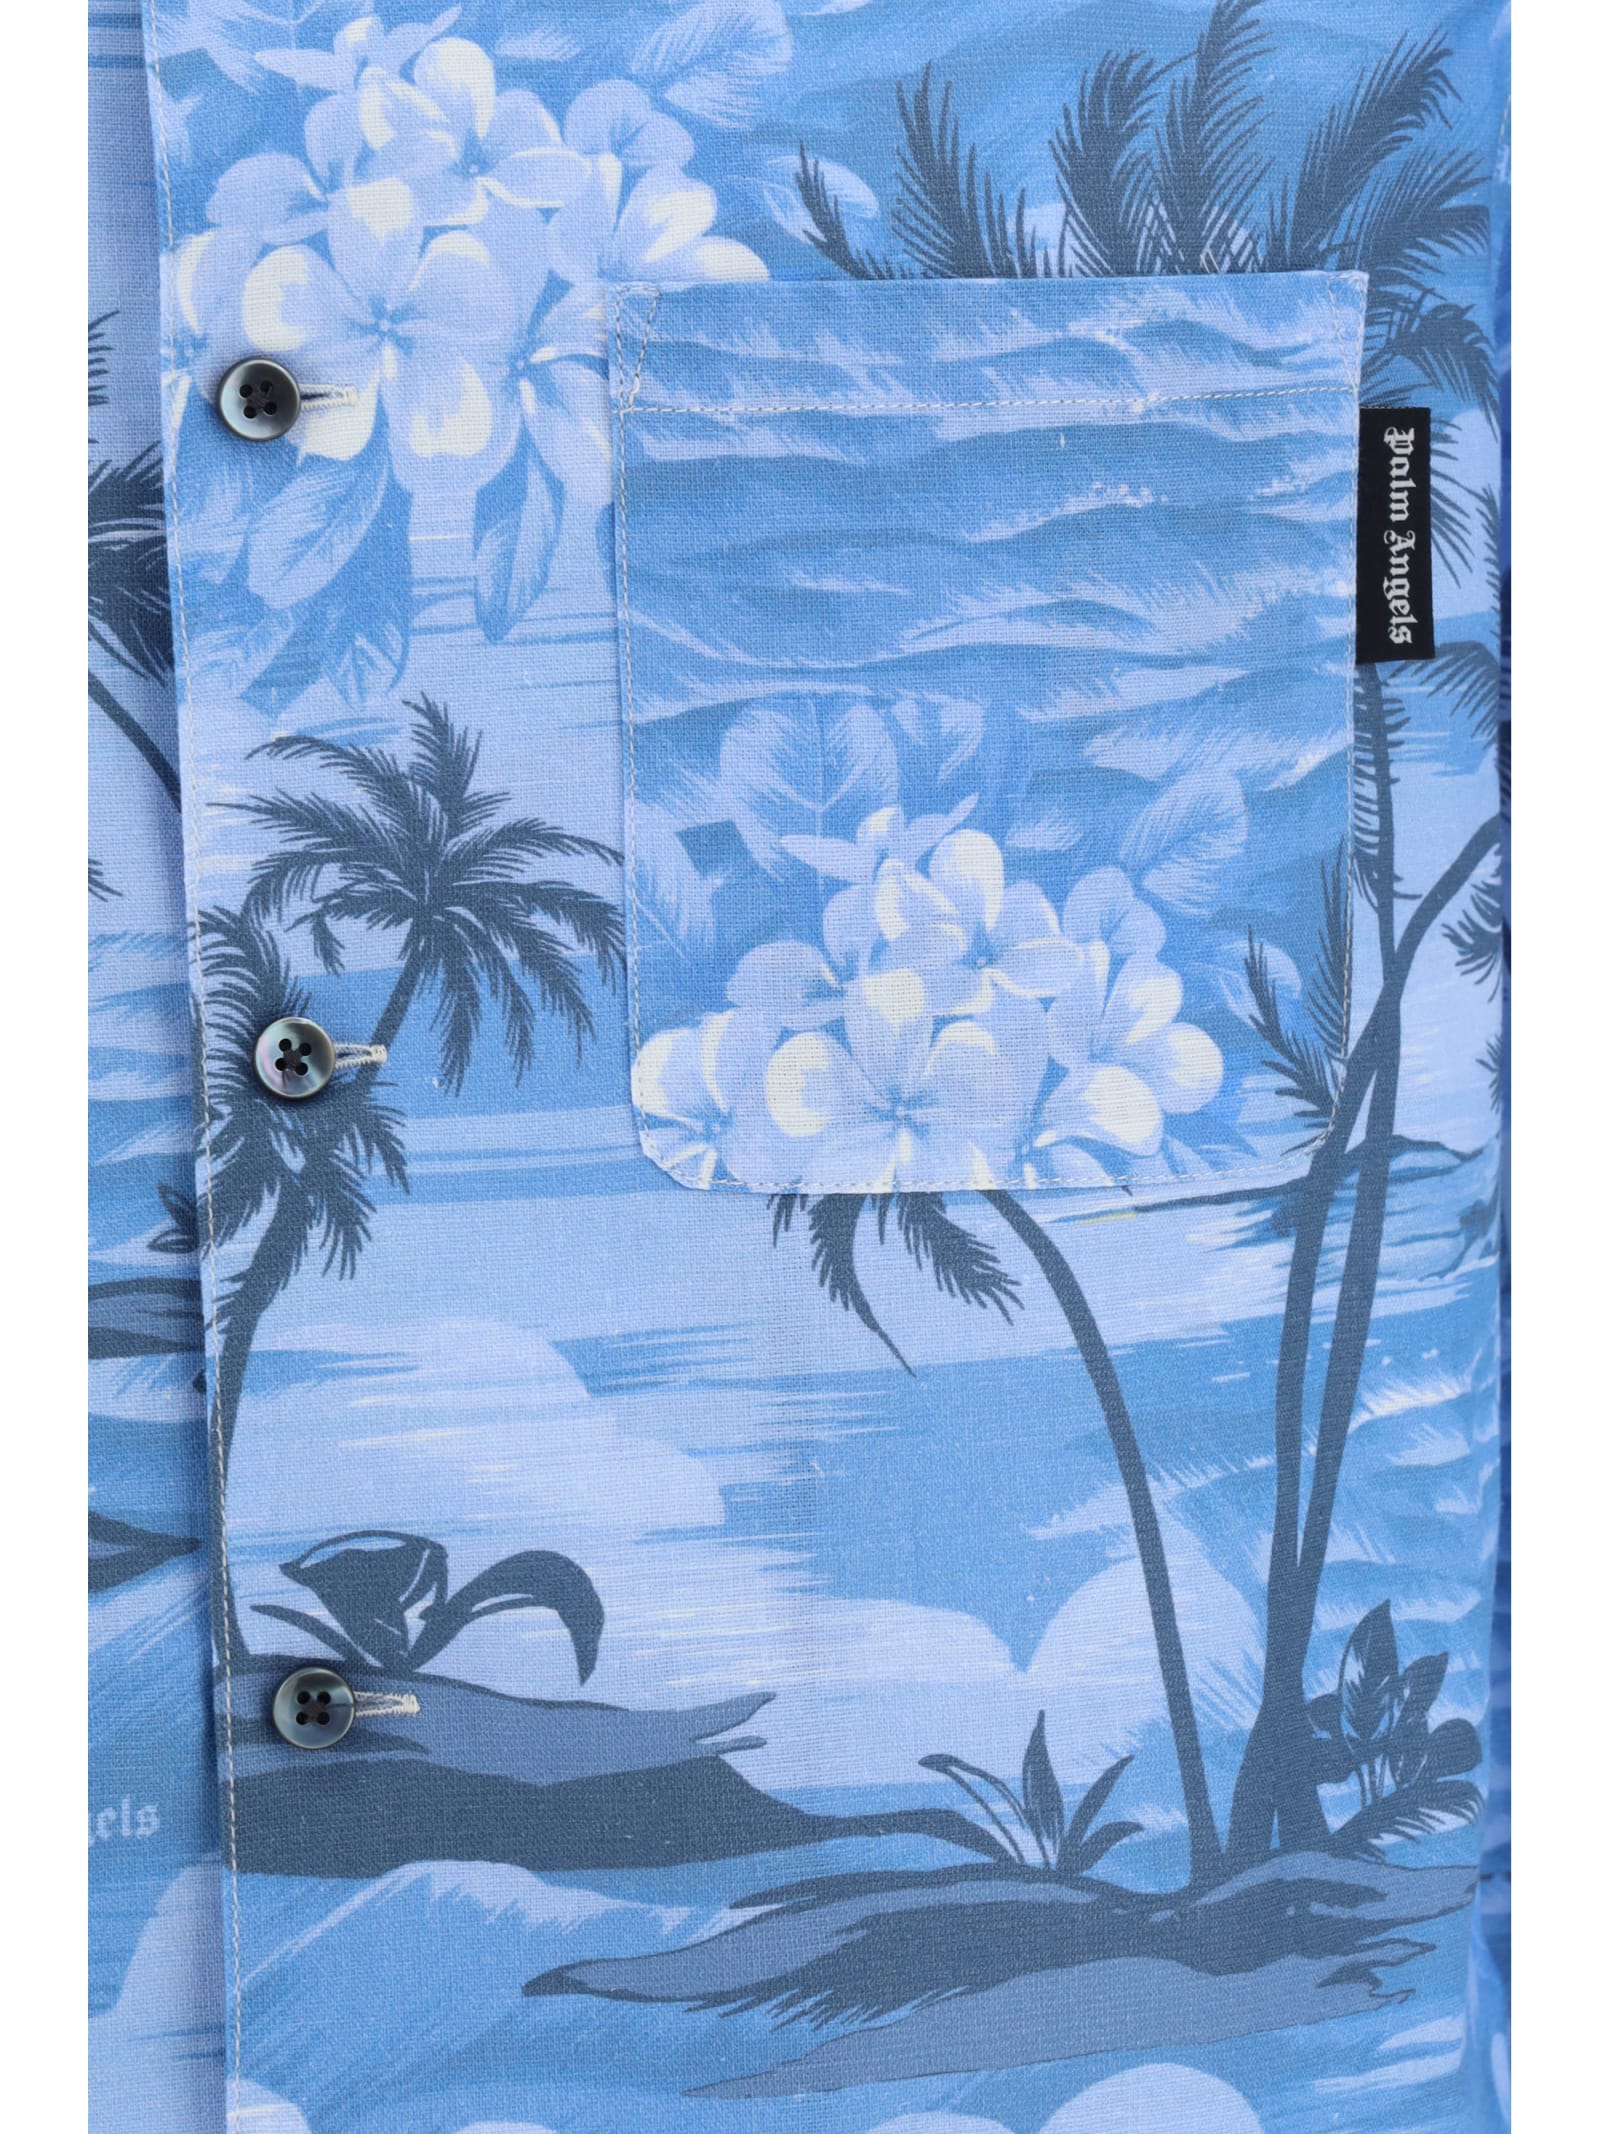 Shop Palm Angels Sunset Bowling Shirt In Indigo Blue Indigo Blue